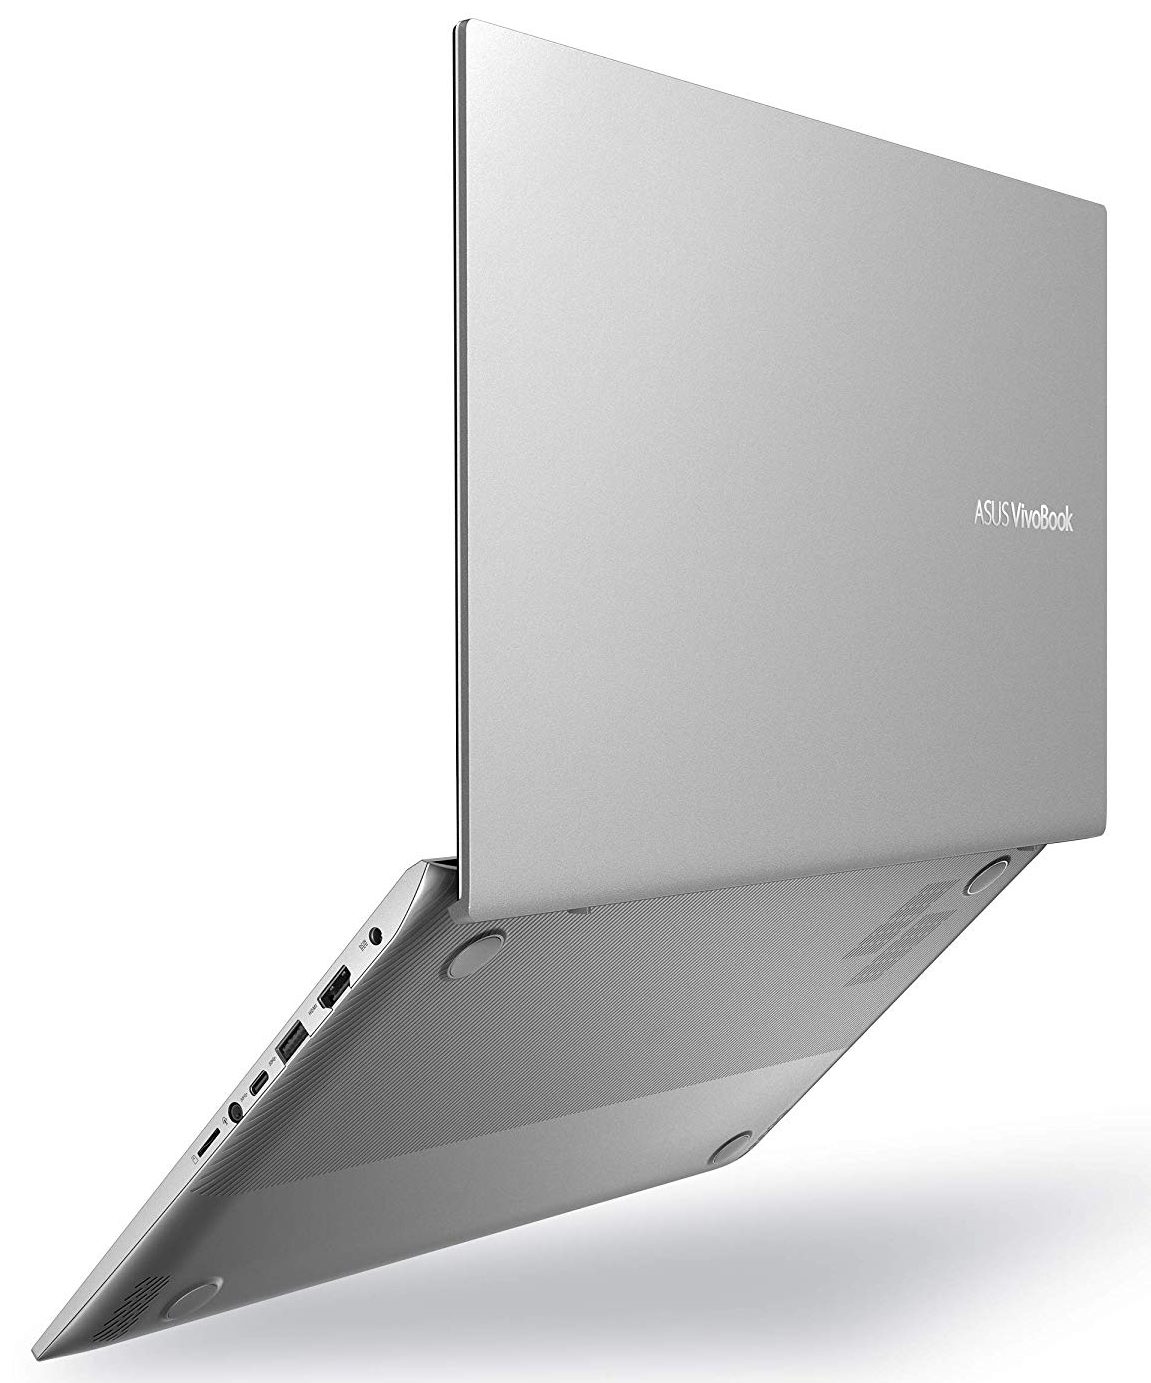 ASUS VivoBook S15 S532 - i5-8265U · MX250 · 15.6”, Full HD (1920 x 1080),  TN · 512GB SSD · 8GB DDR4 · Windows 10 Home